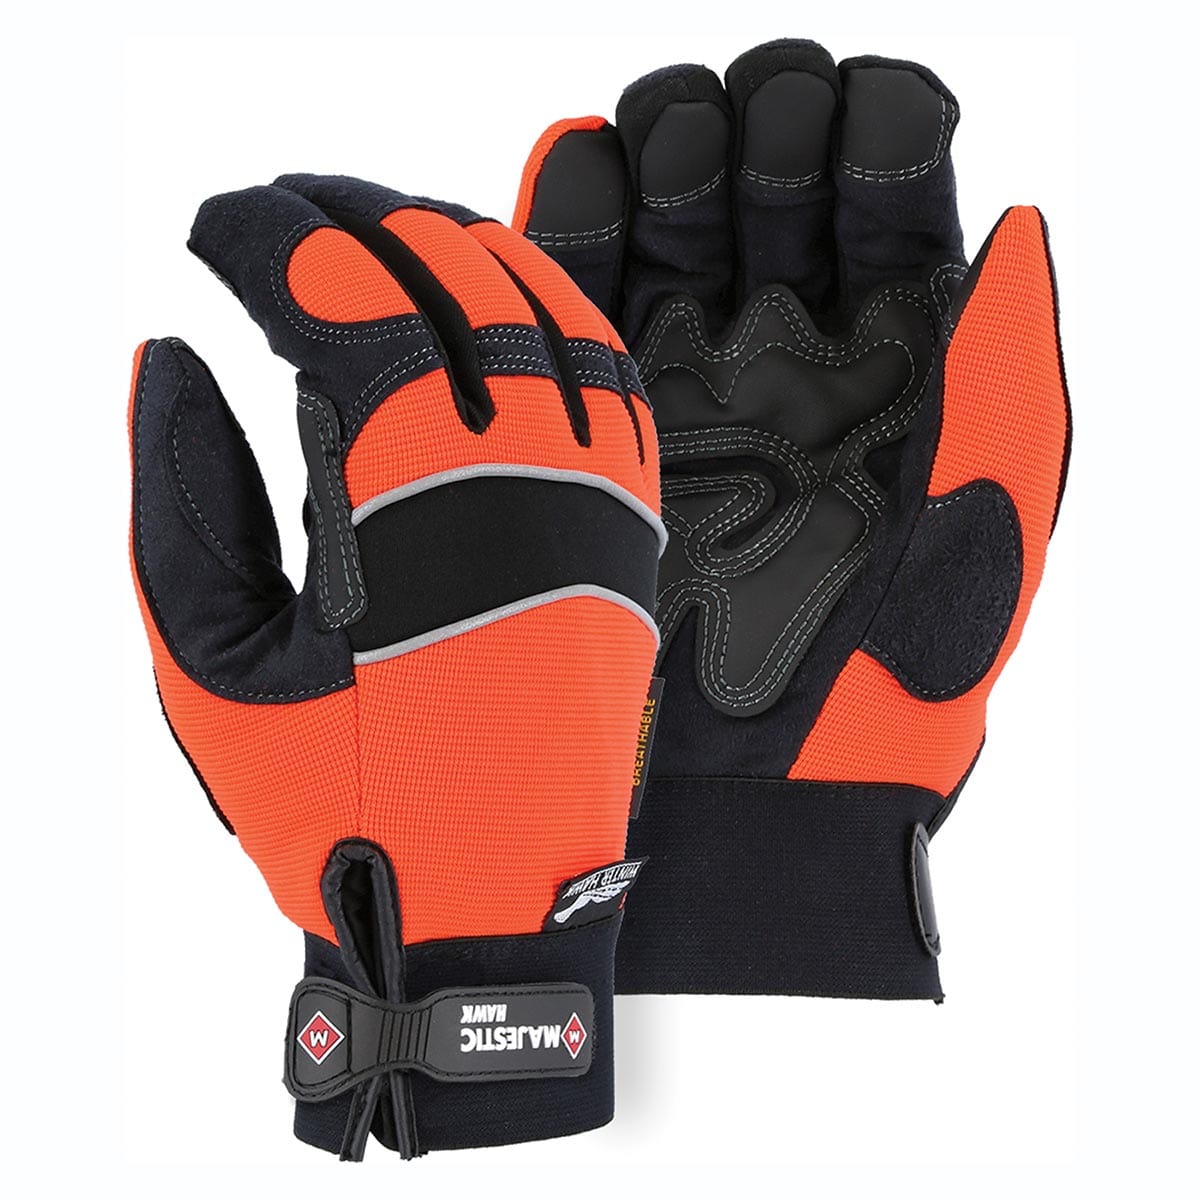 Majestic Winter Lined Armor Skin Enhanced Visibility Knit Back Mechanics Glove 12 pr